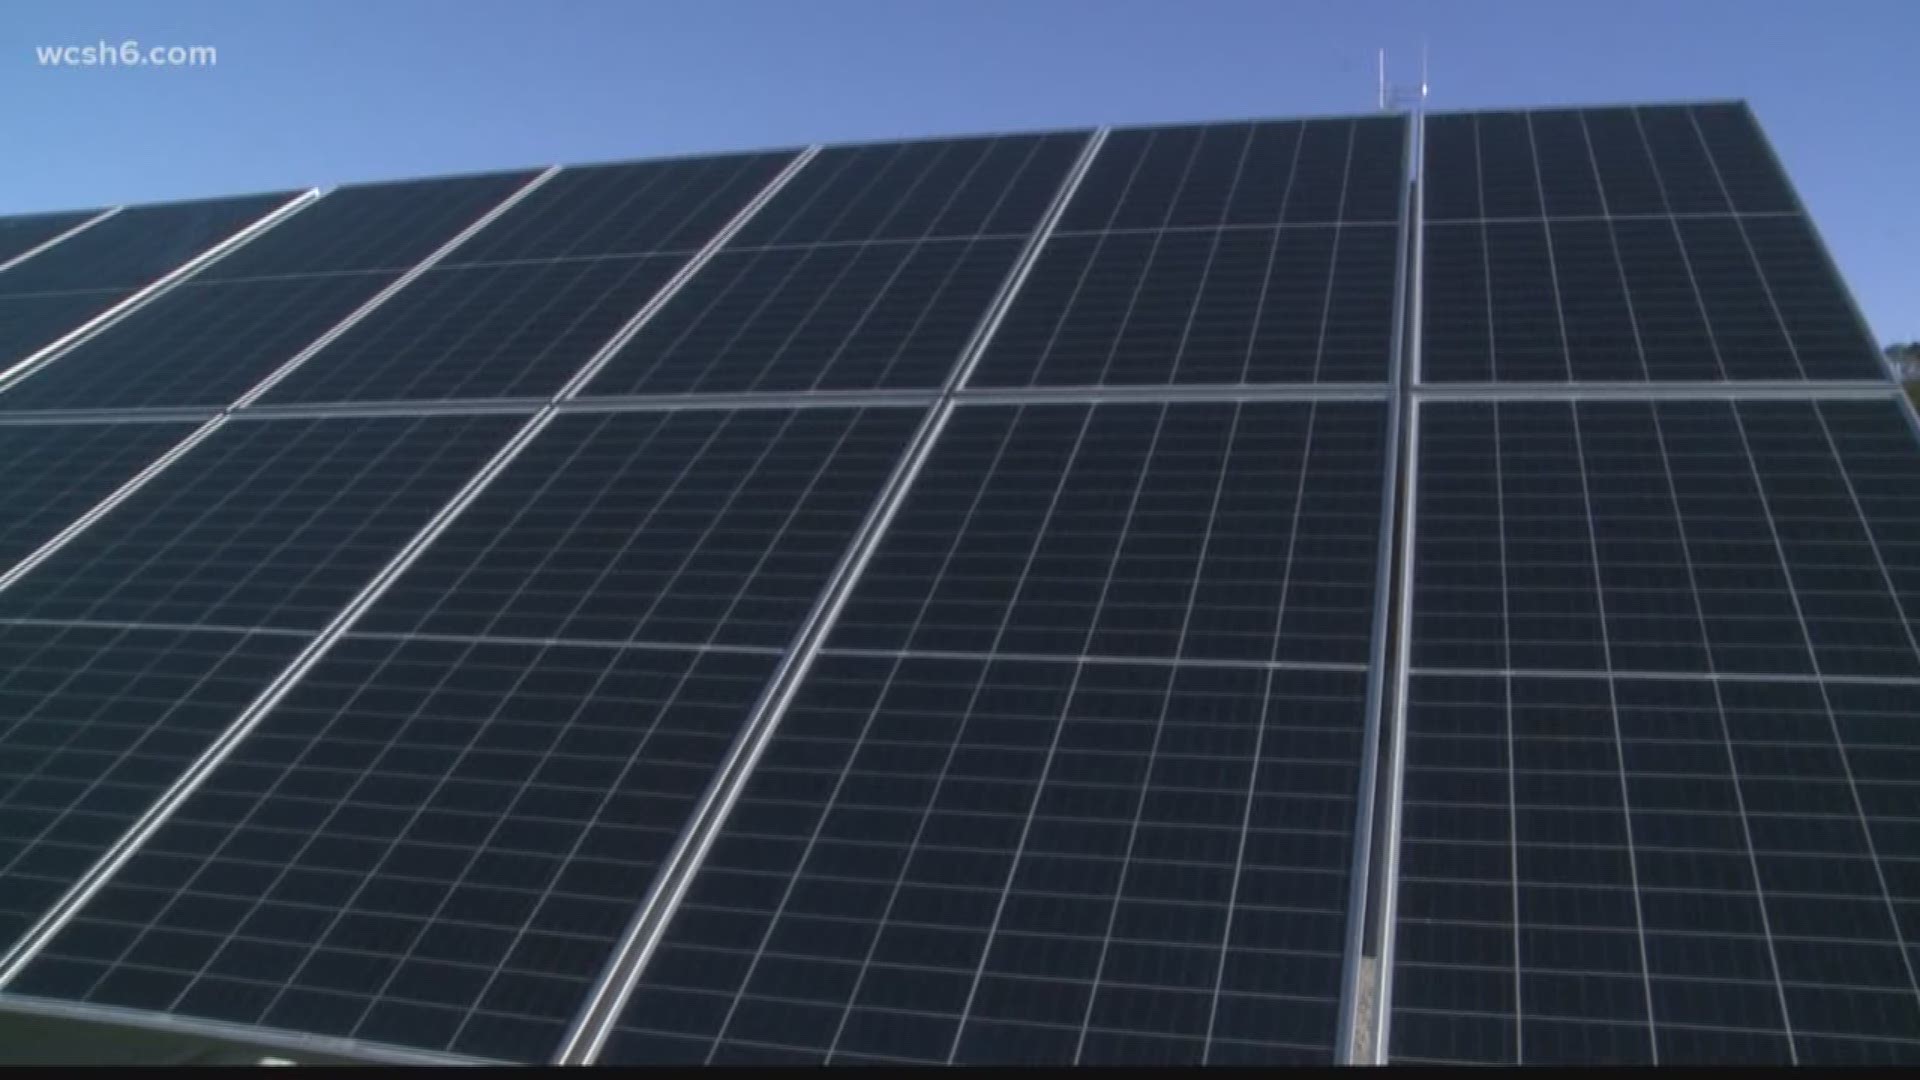 South Portland Solar Array Goes Online